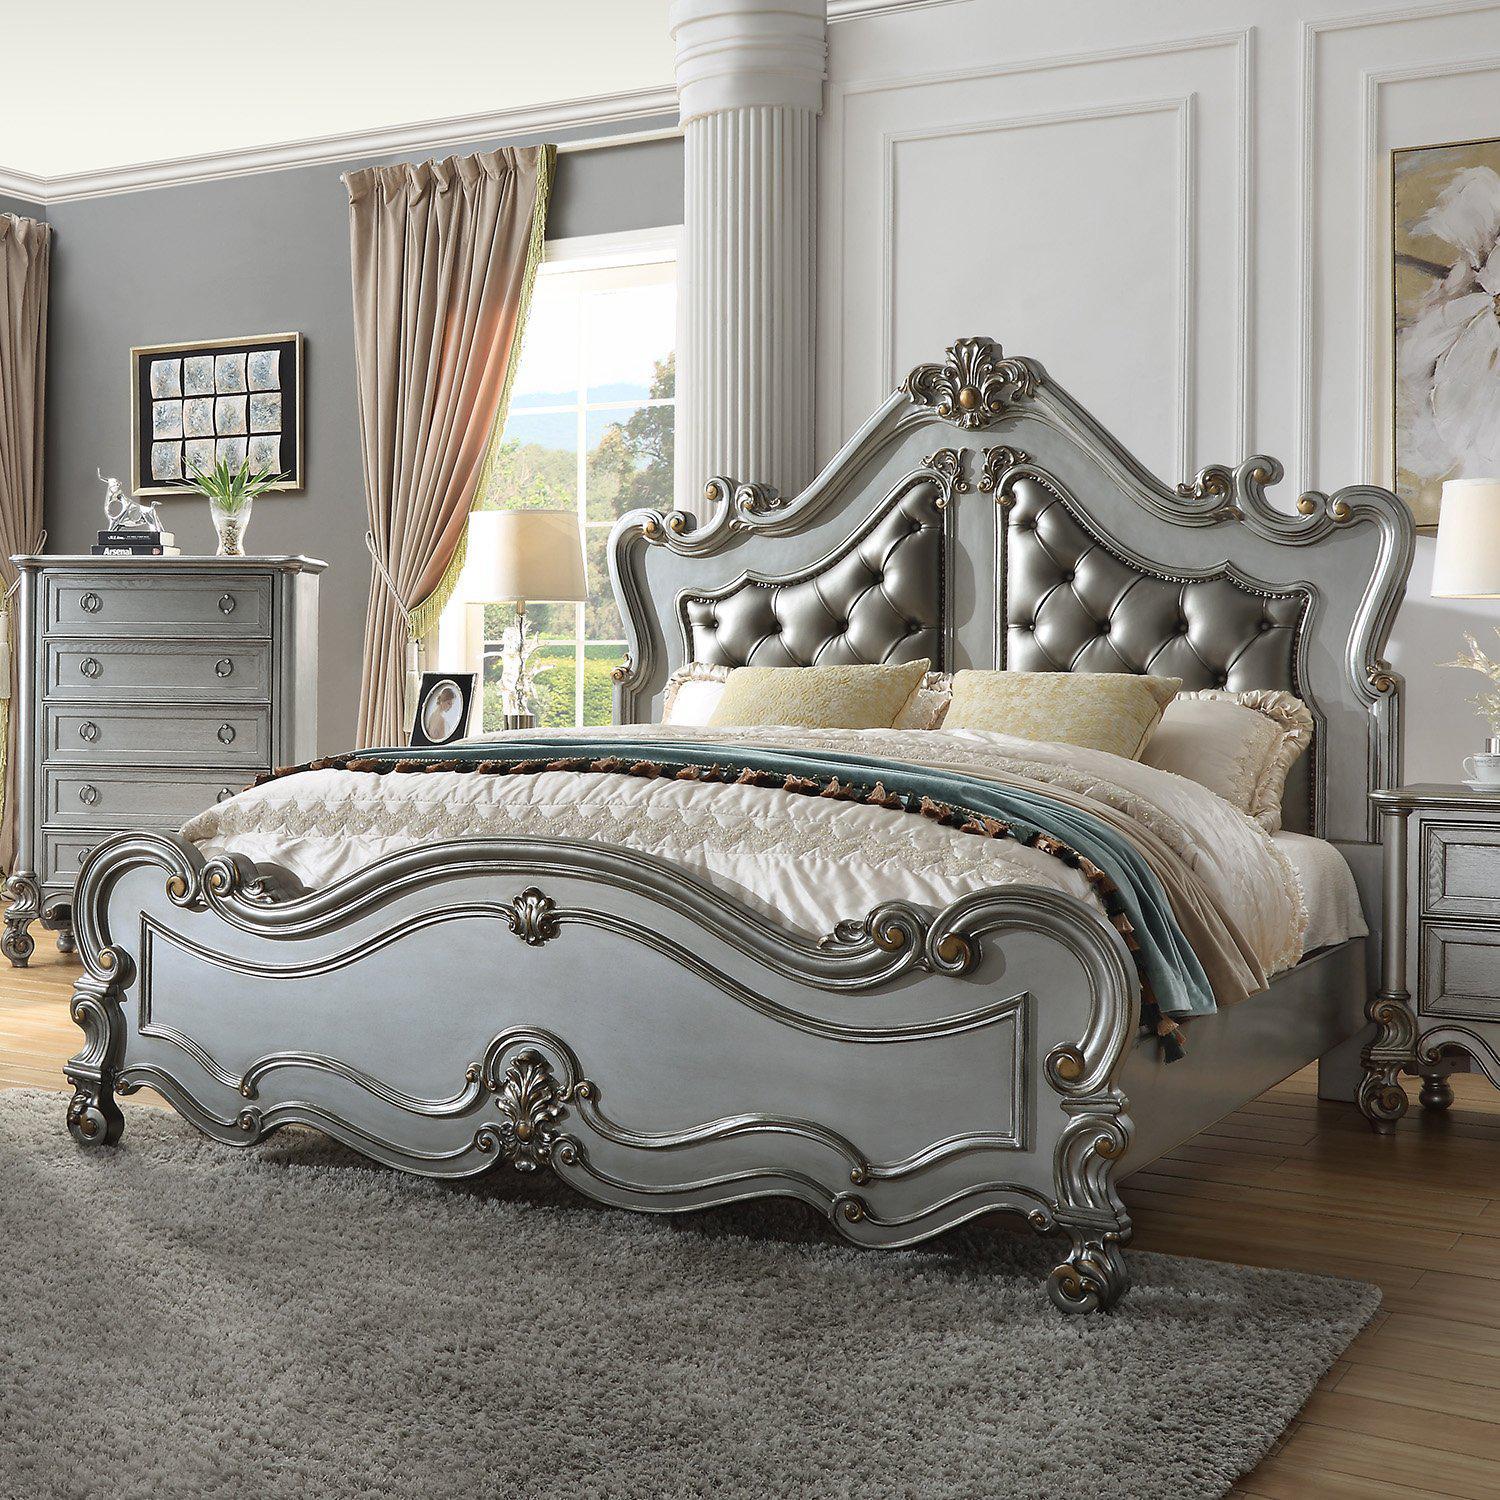 Homey Design Luxury Hd-999 - Ck 4Pc Bedroom Set-Iron Home Concepts